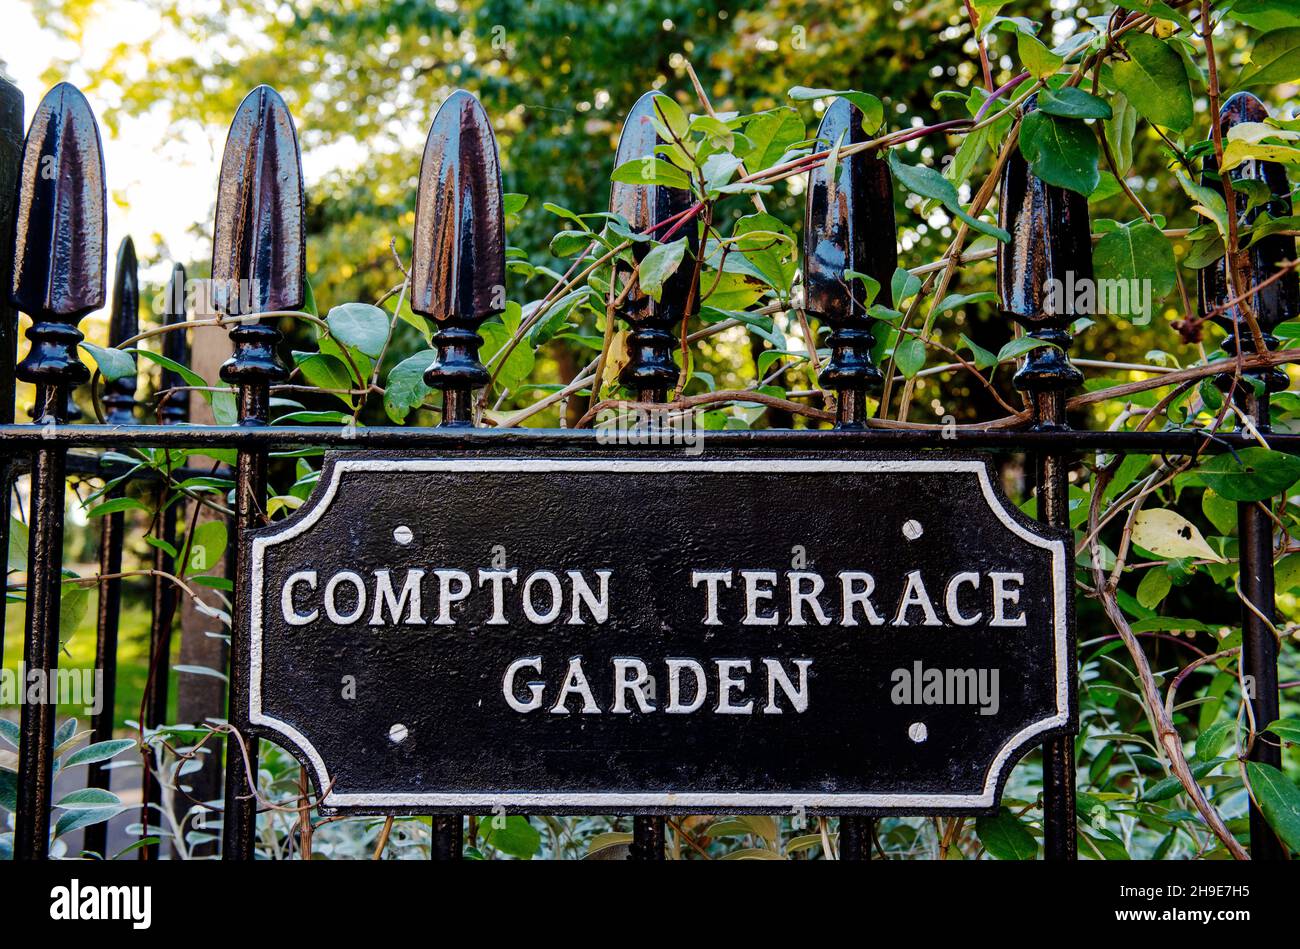 Cartel Compton Terrace Garden en barandillas de hierro forjado, Londres Borough of Islington, Inglaterra, Gran Bretaña Reino Unido Foto de stock